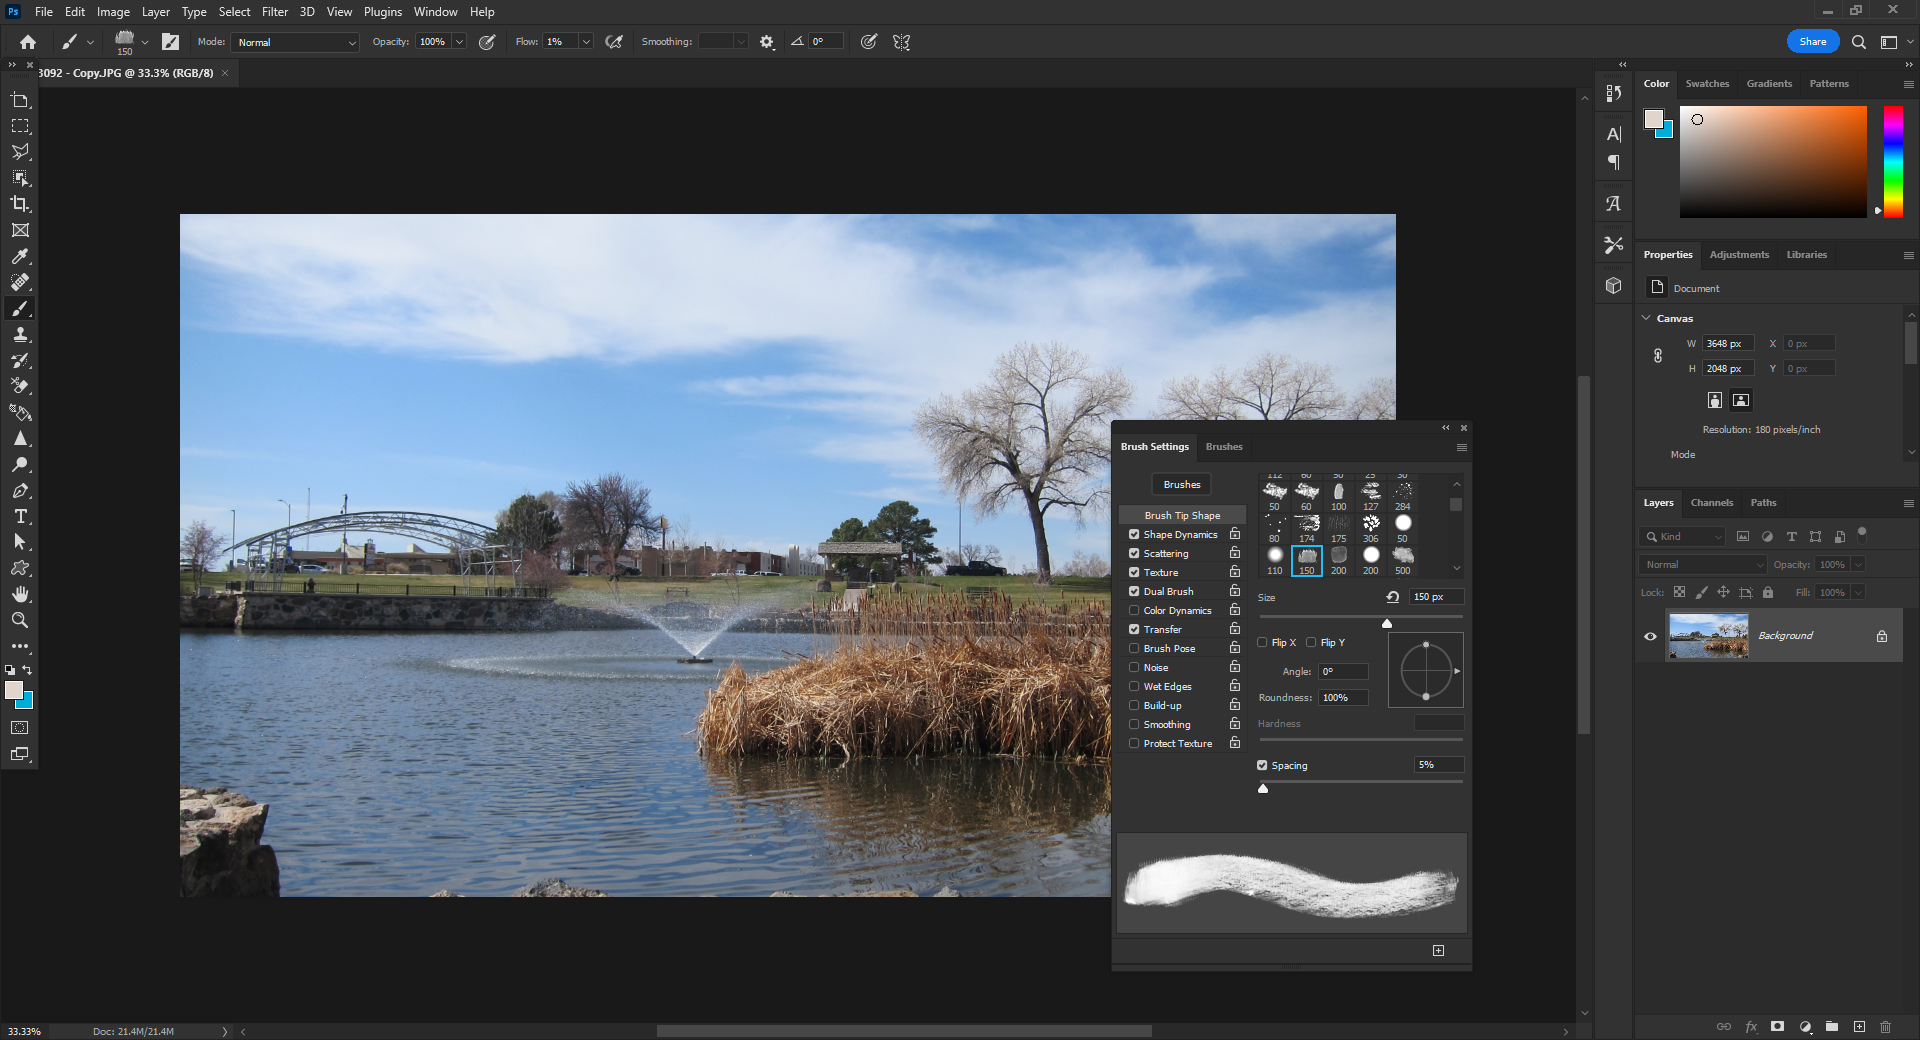 Adobe Photoshop Elements 2022 in Dark mode. - Adobe Community